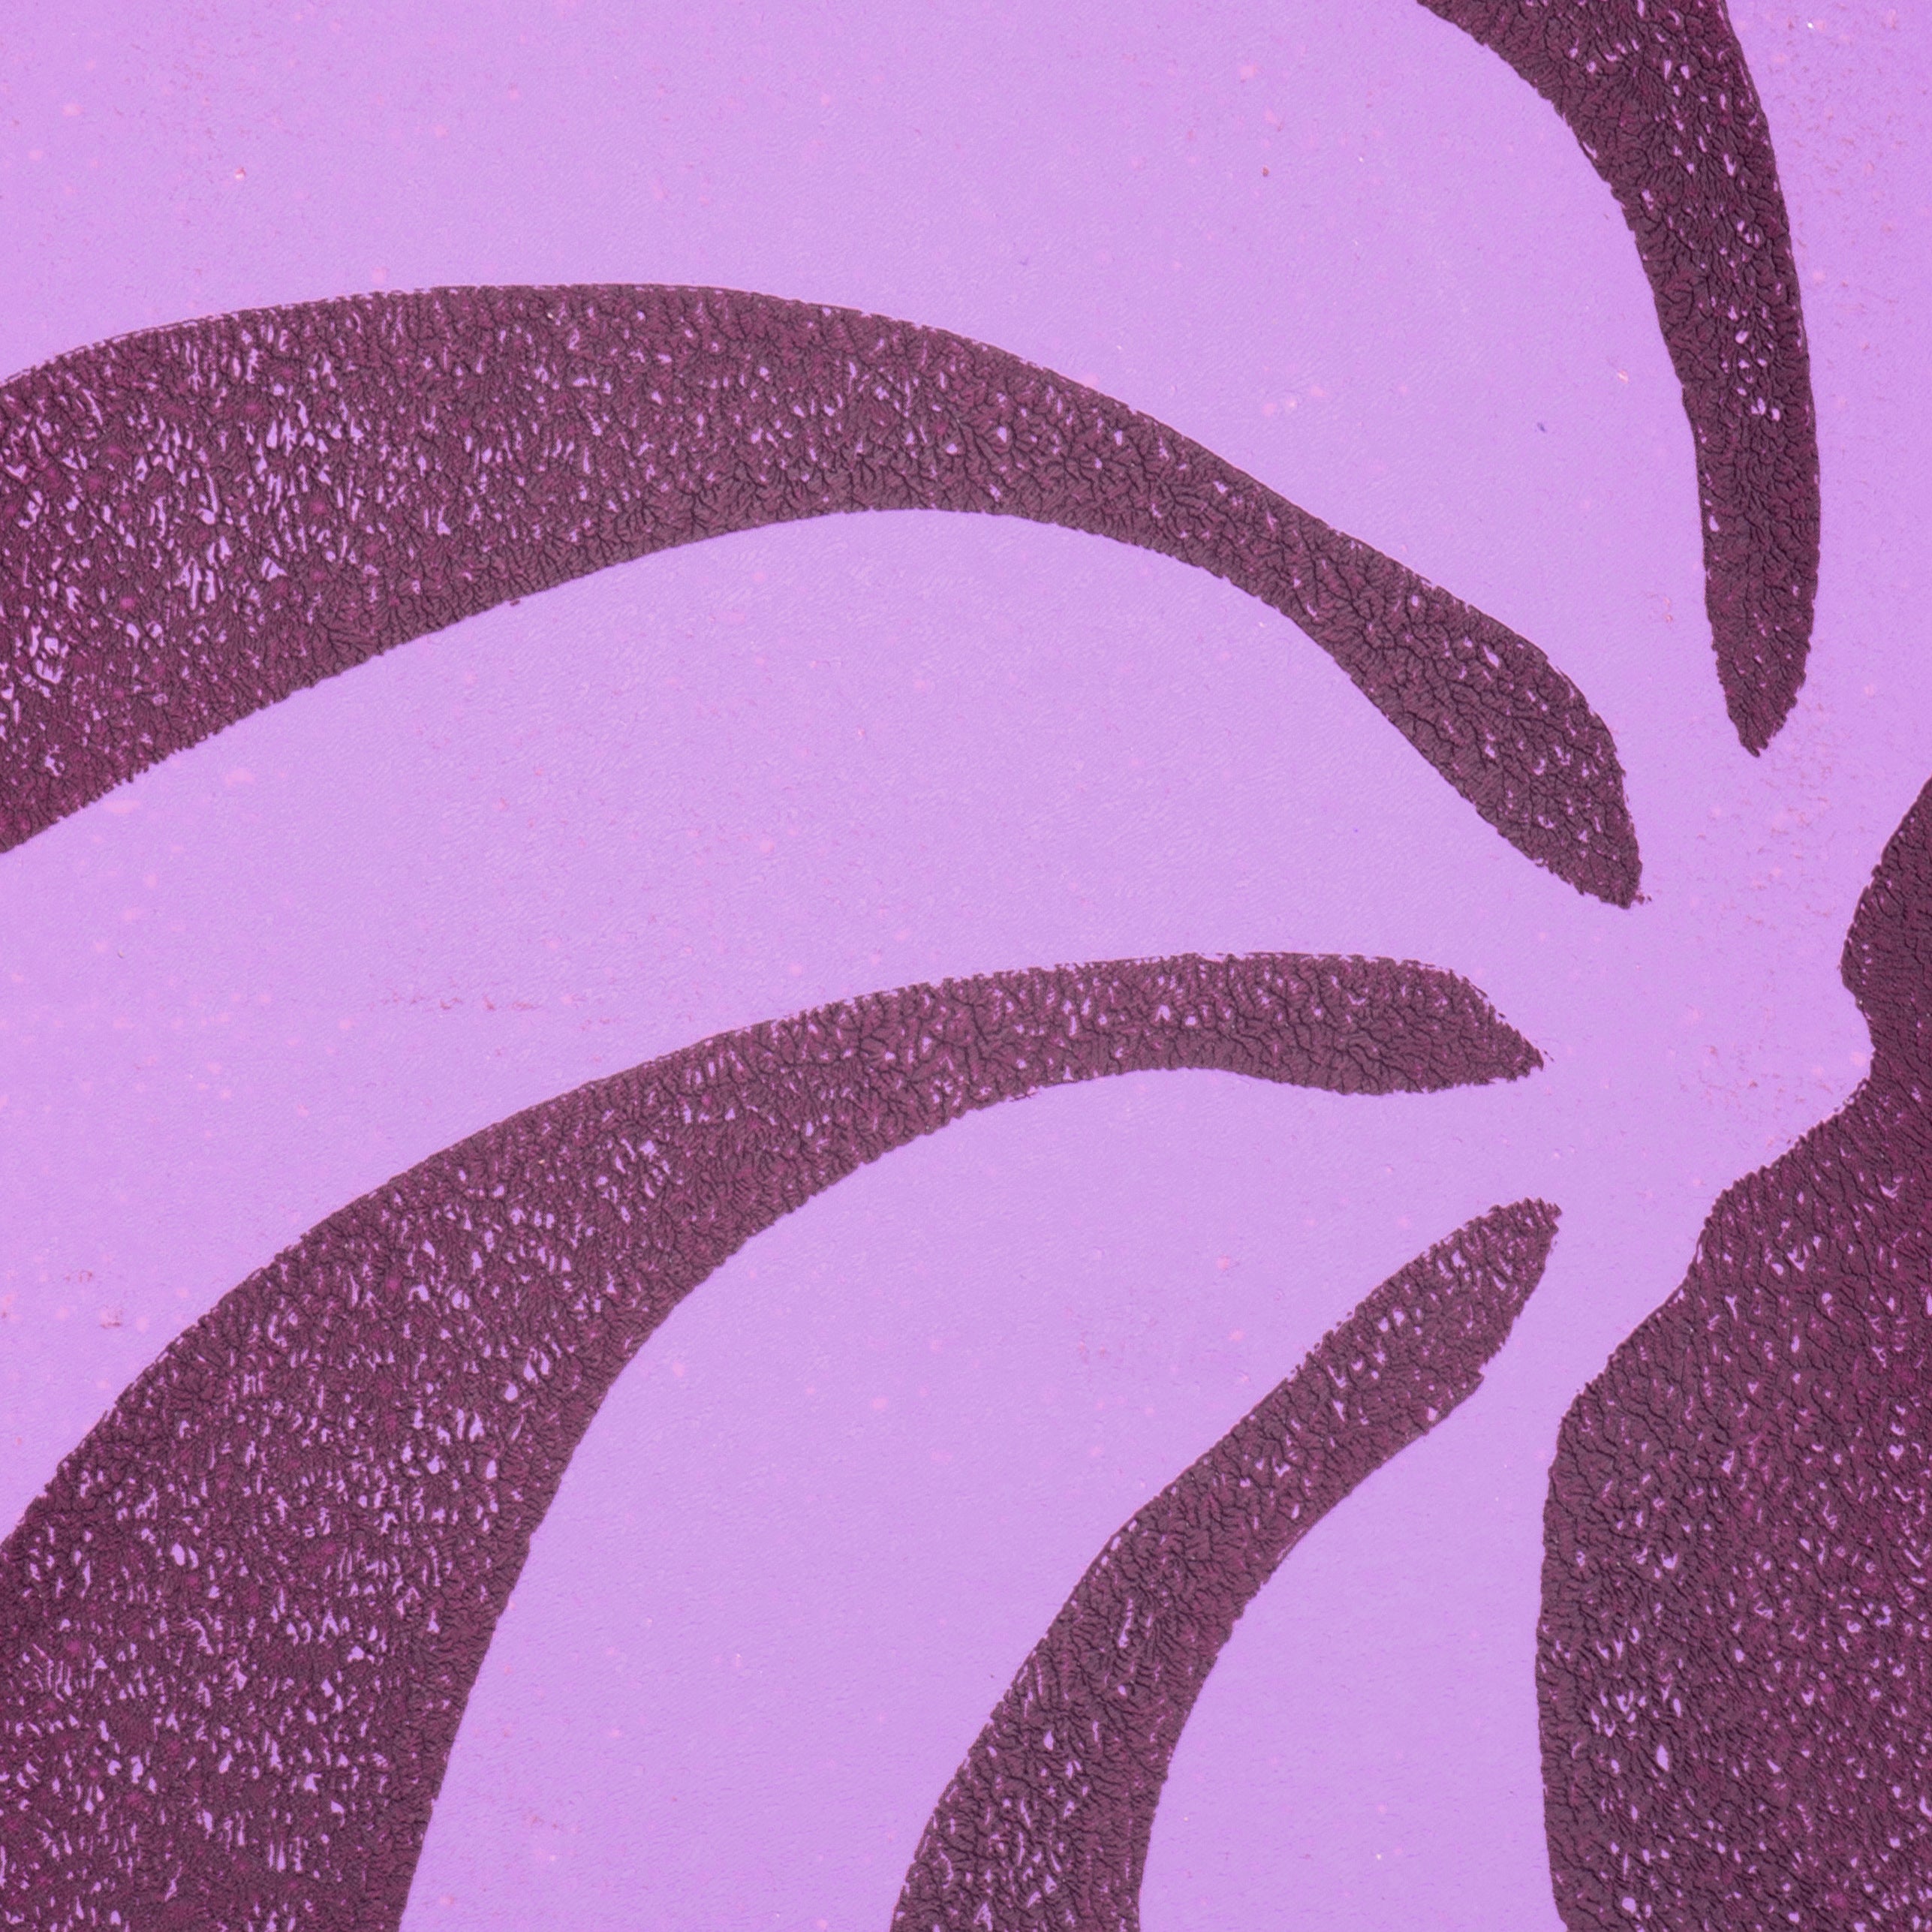 Handmade wall art with purple bananas I Handmade poster Enkel Art Studio